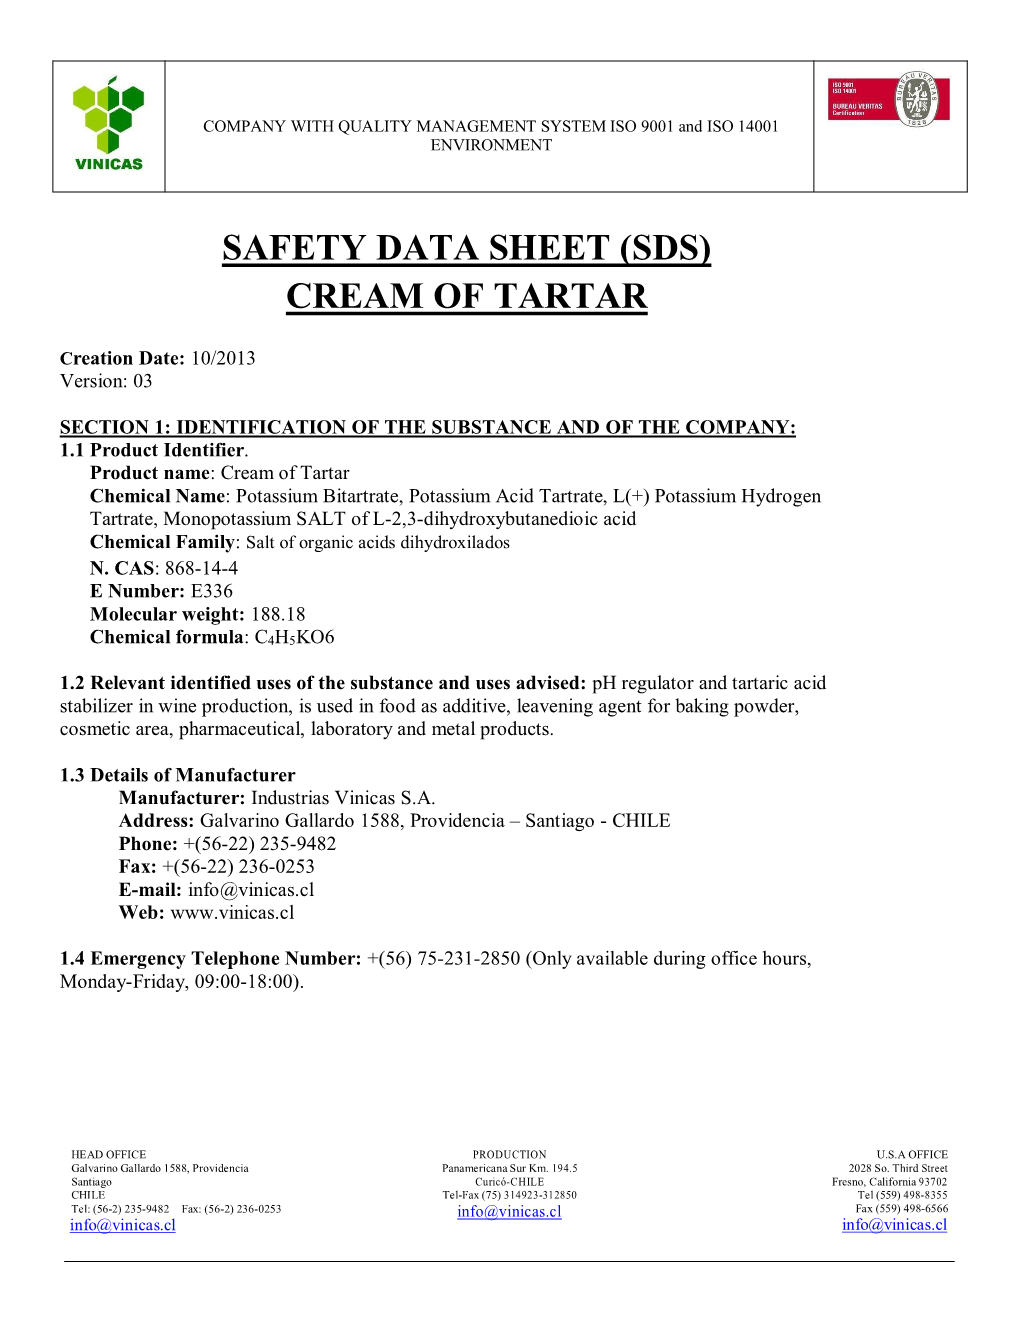 Safety Data Sheet (Sds) Cream of Tartar